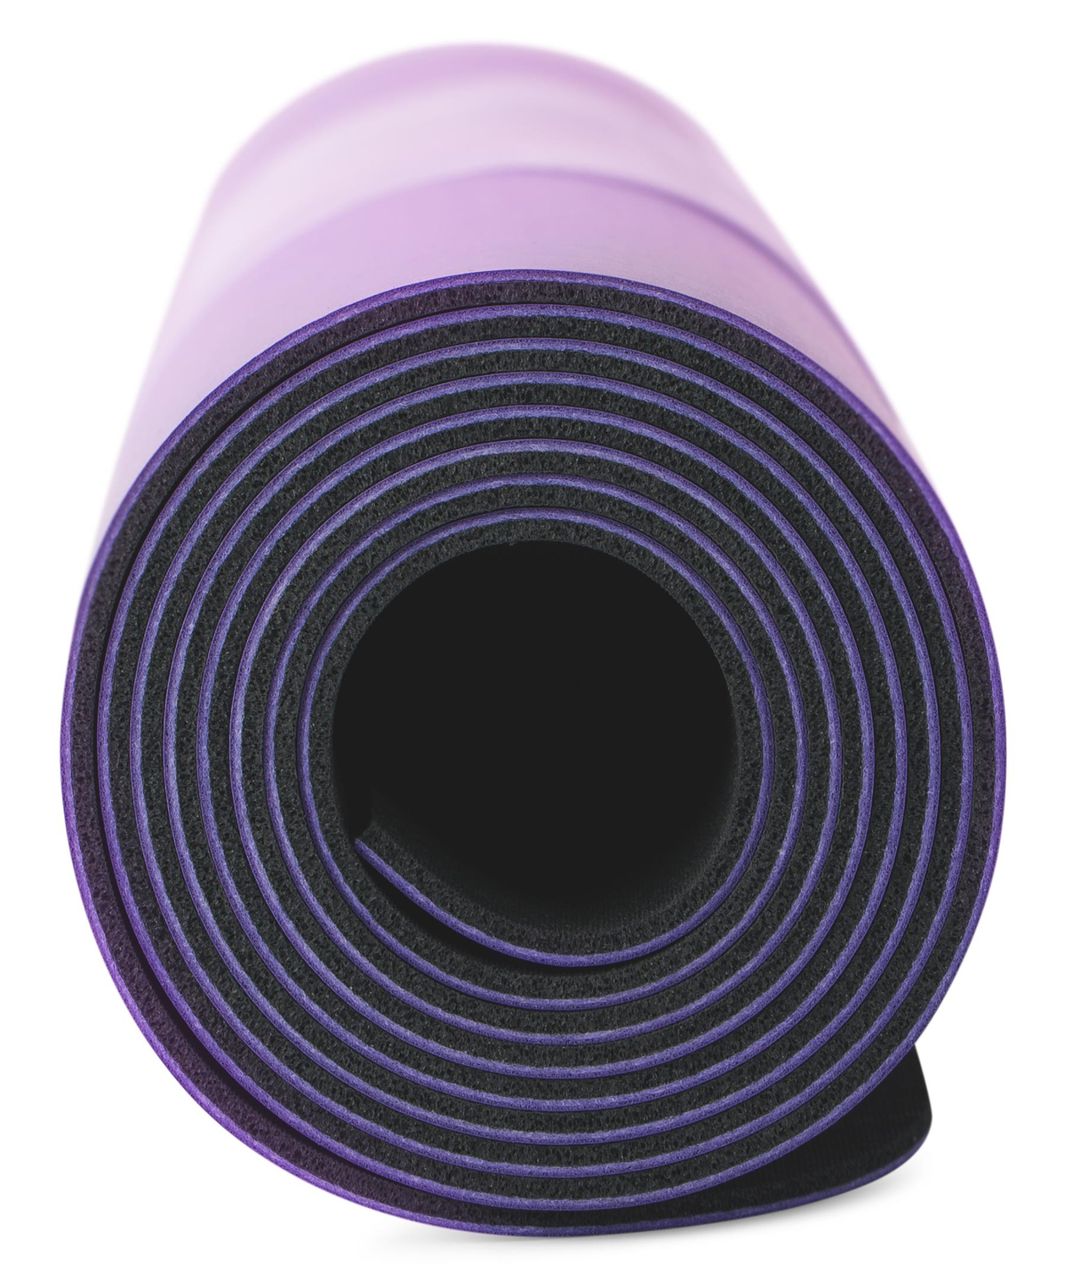 Lululemon The Mat 3mm - Power Purple